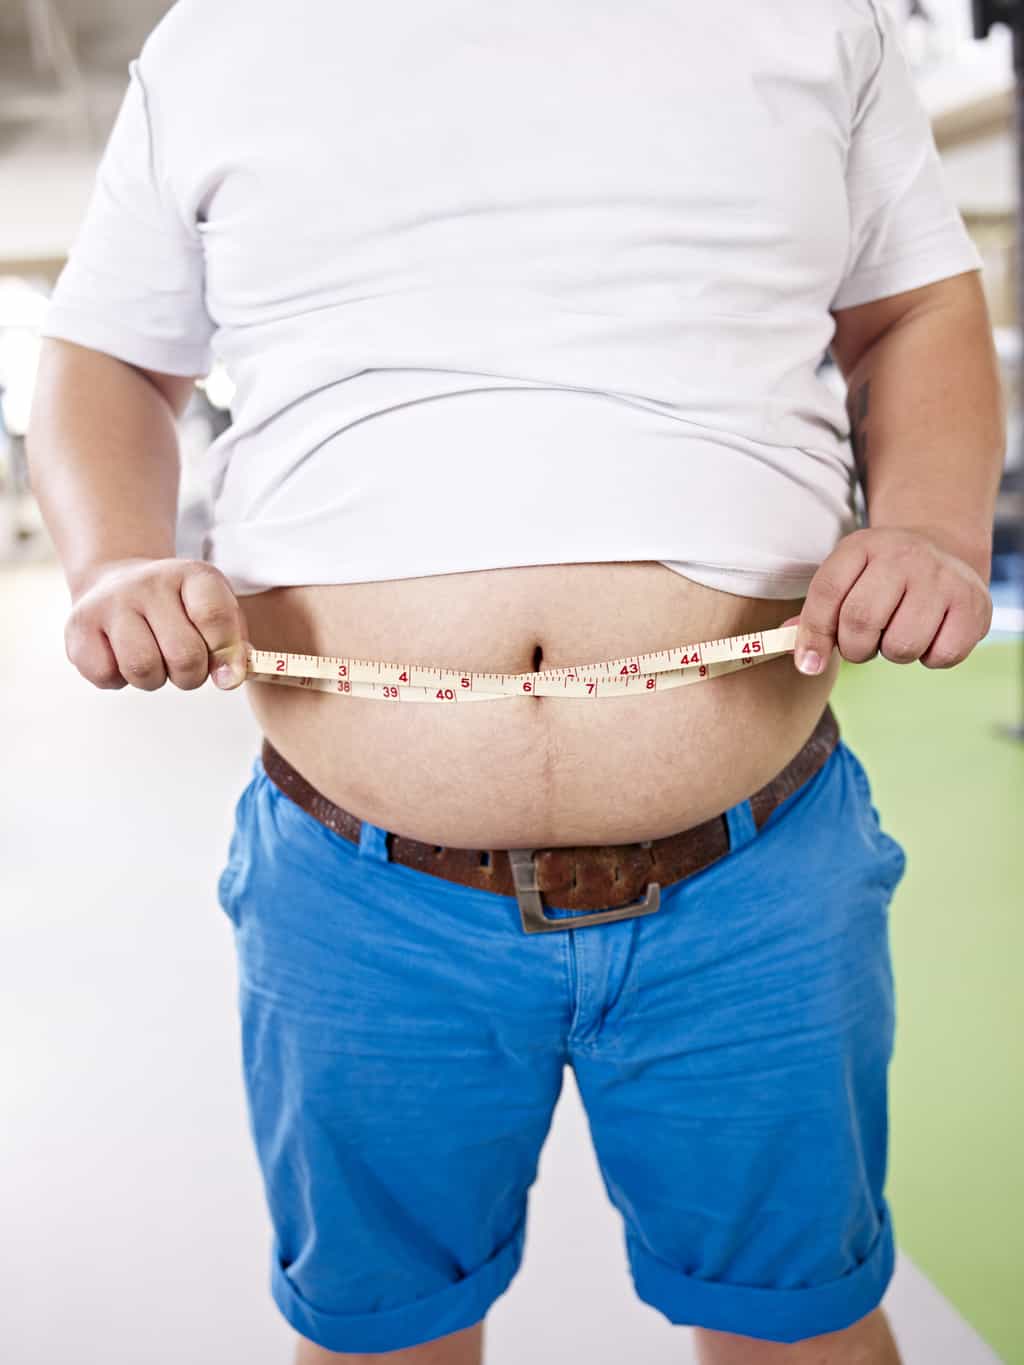 Landmark study reveals it's healthier to be fat